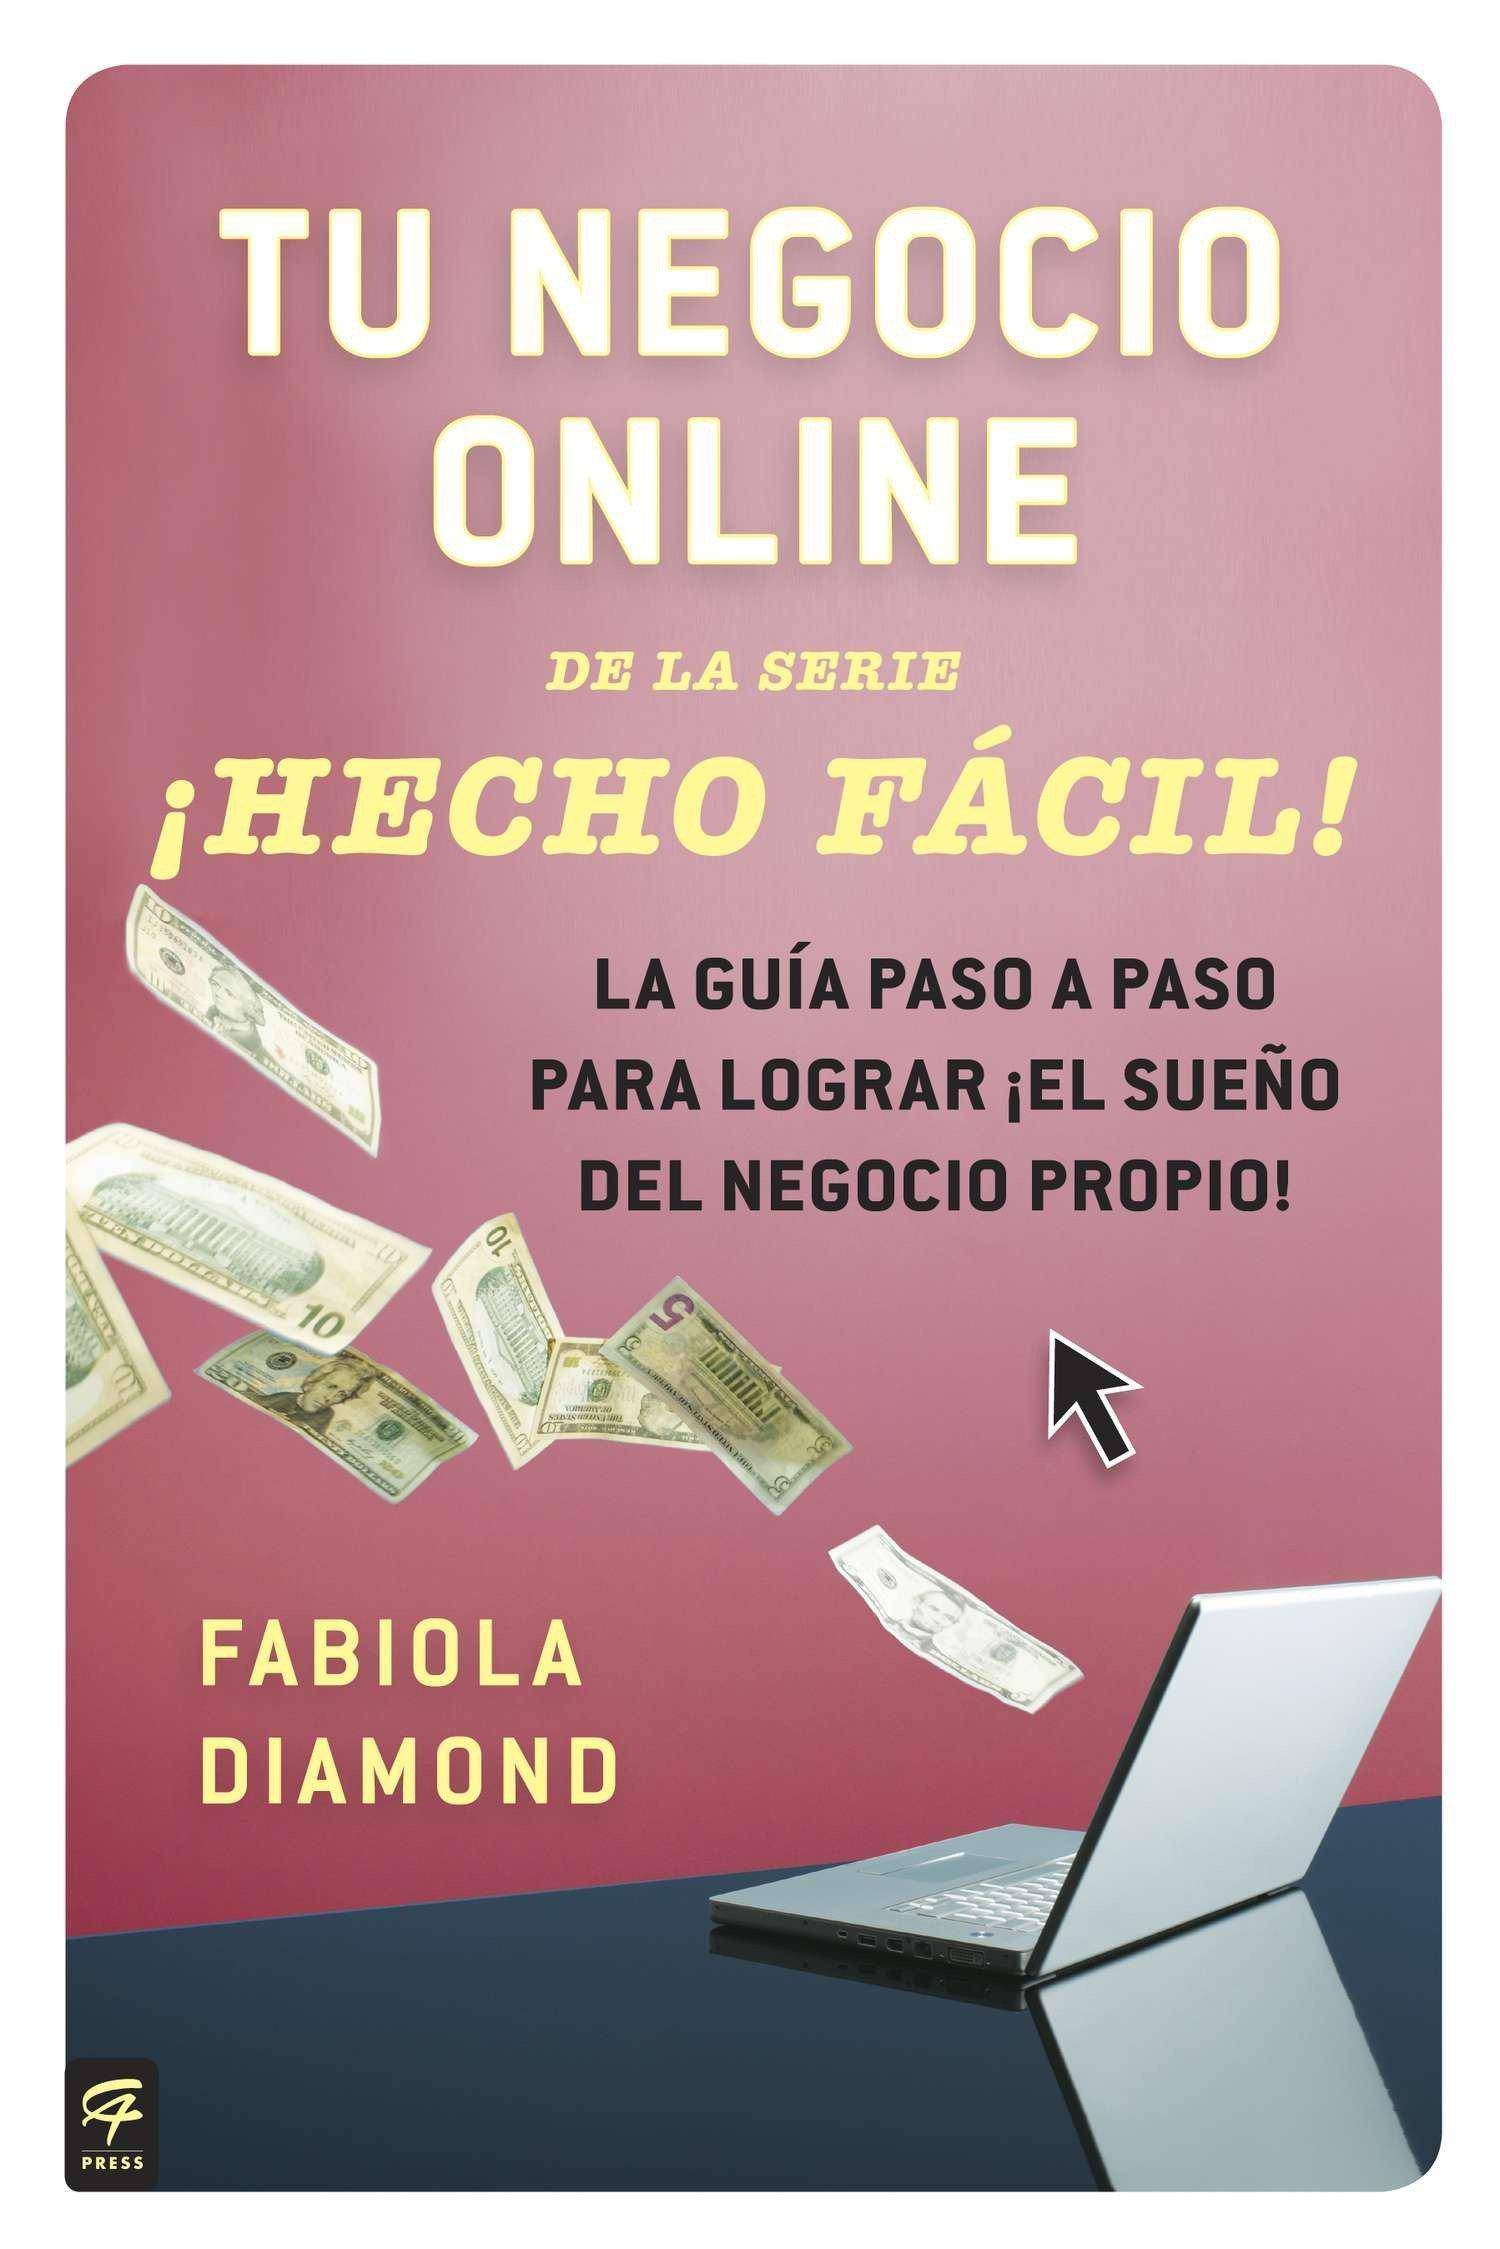 Tu Negocio Online Hecho Facil! - SureShot Books Publishing LLC